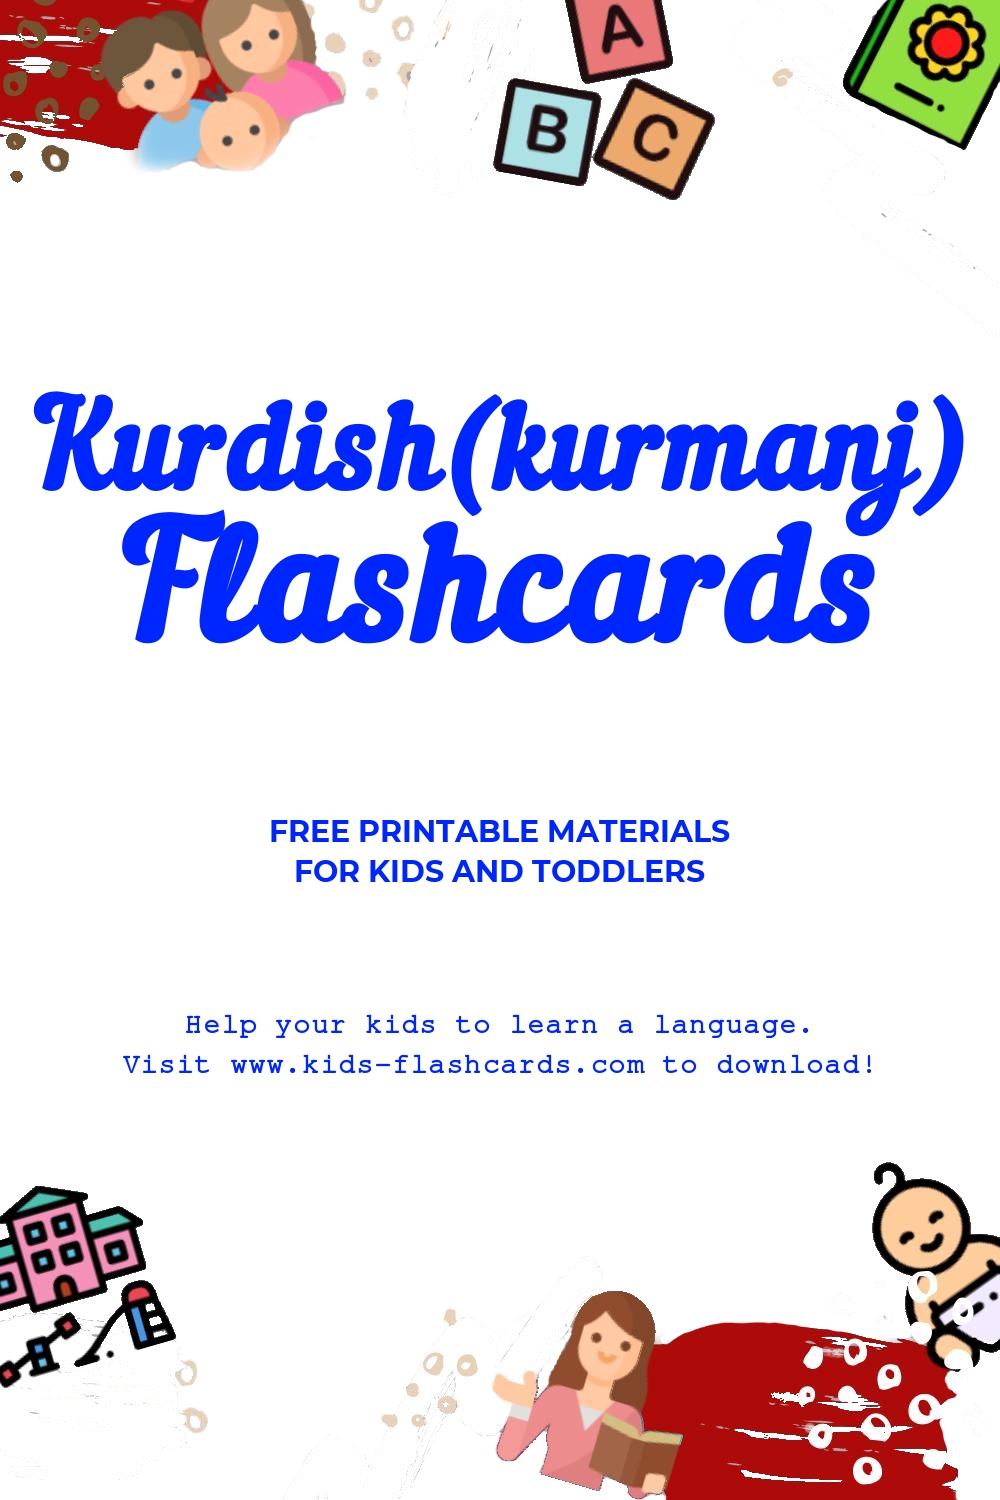 Worksheets to learn Kurdish(kurmanj) language